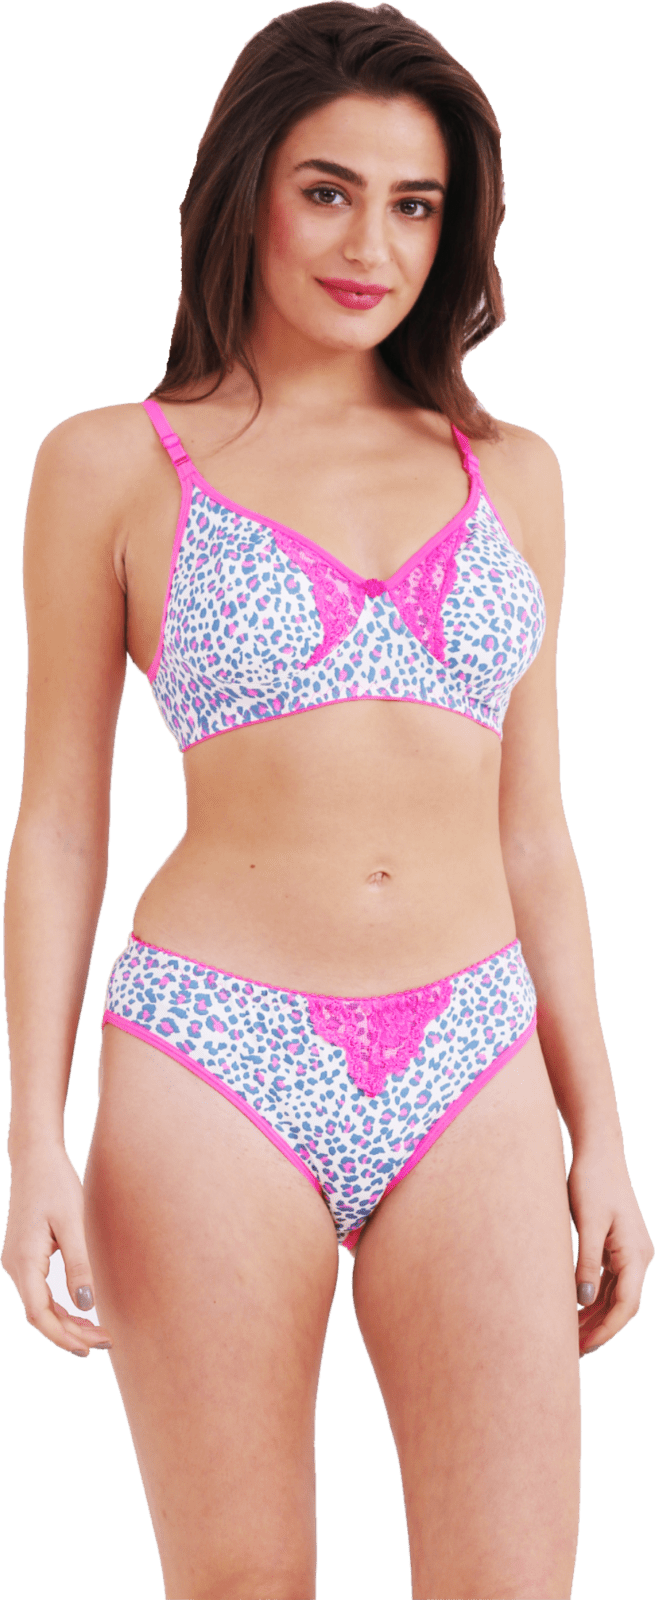 Sunny Printed Ladies Bra Panty Set, Size: 32B and Medium at Rs 230